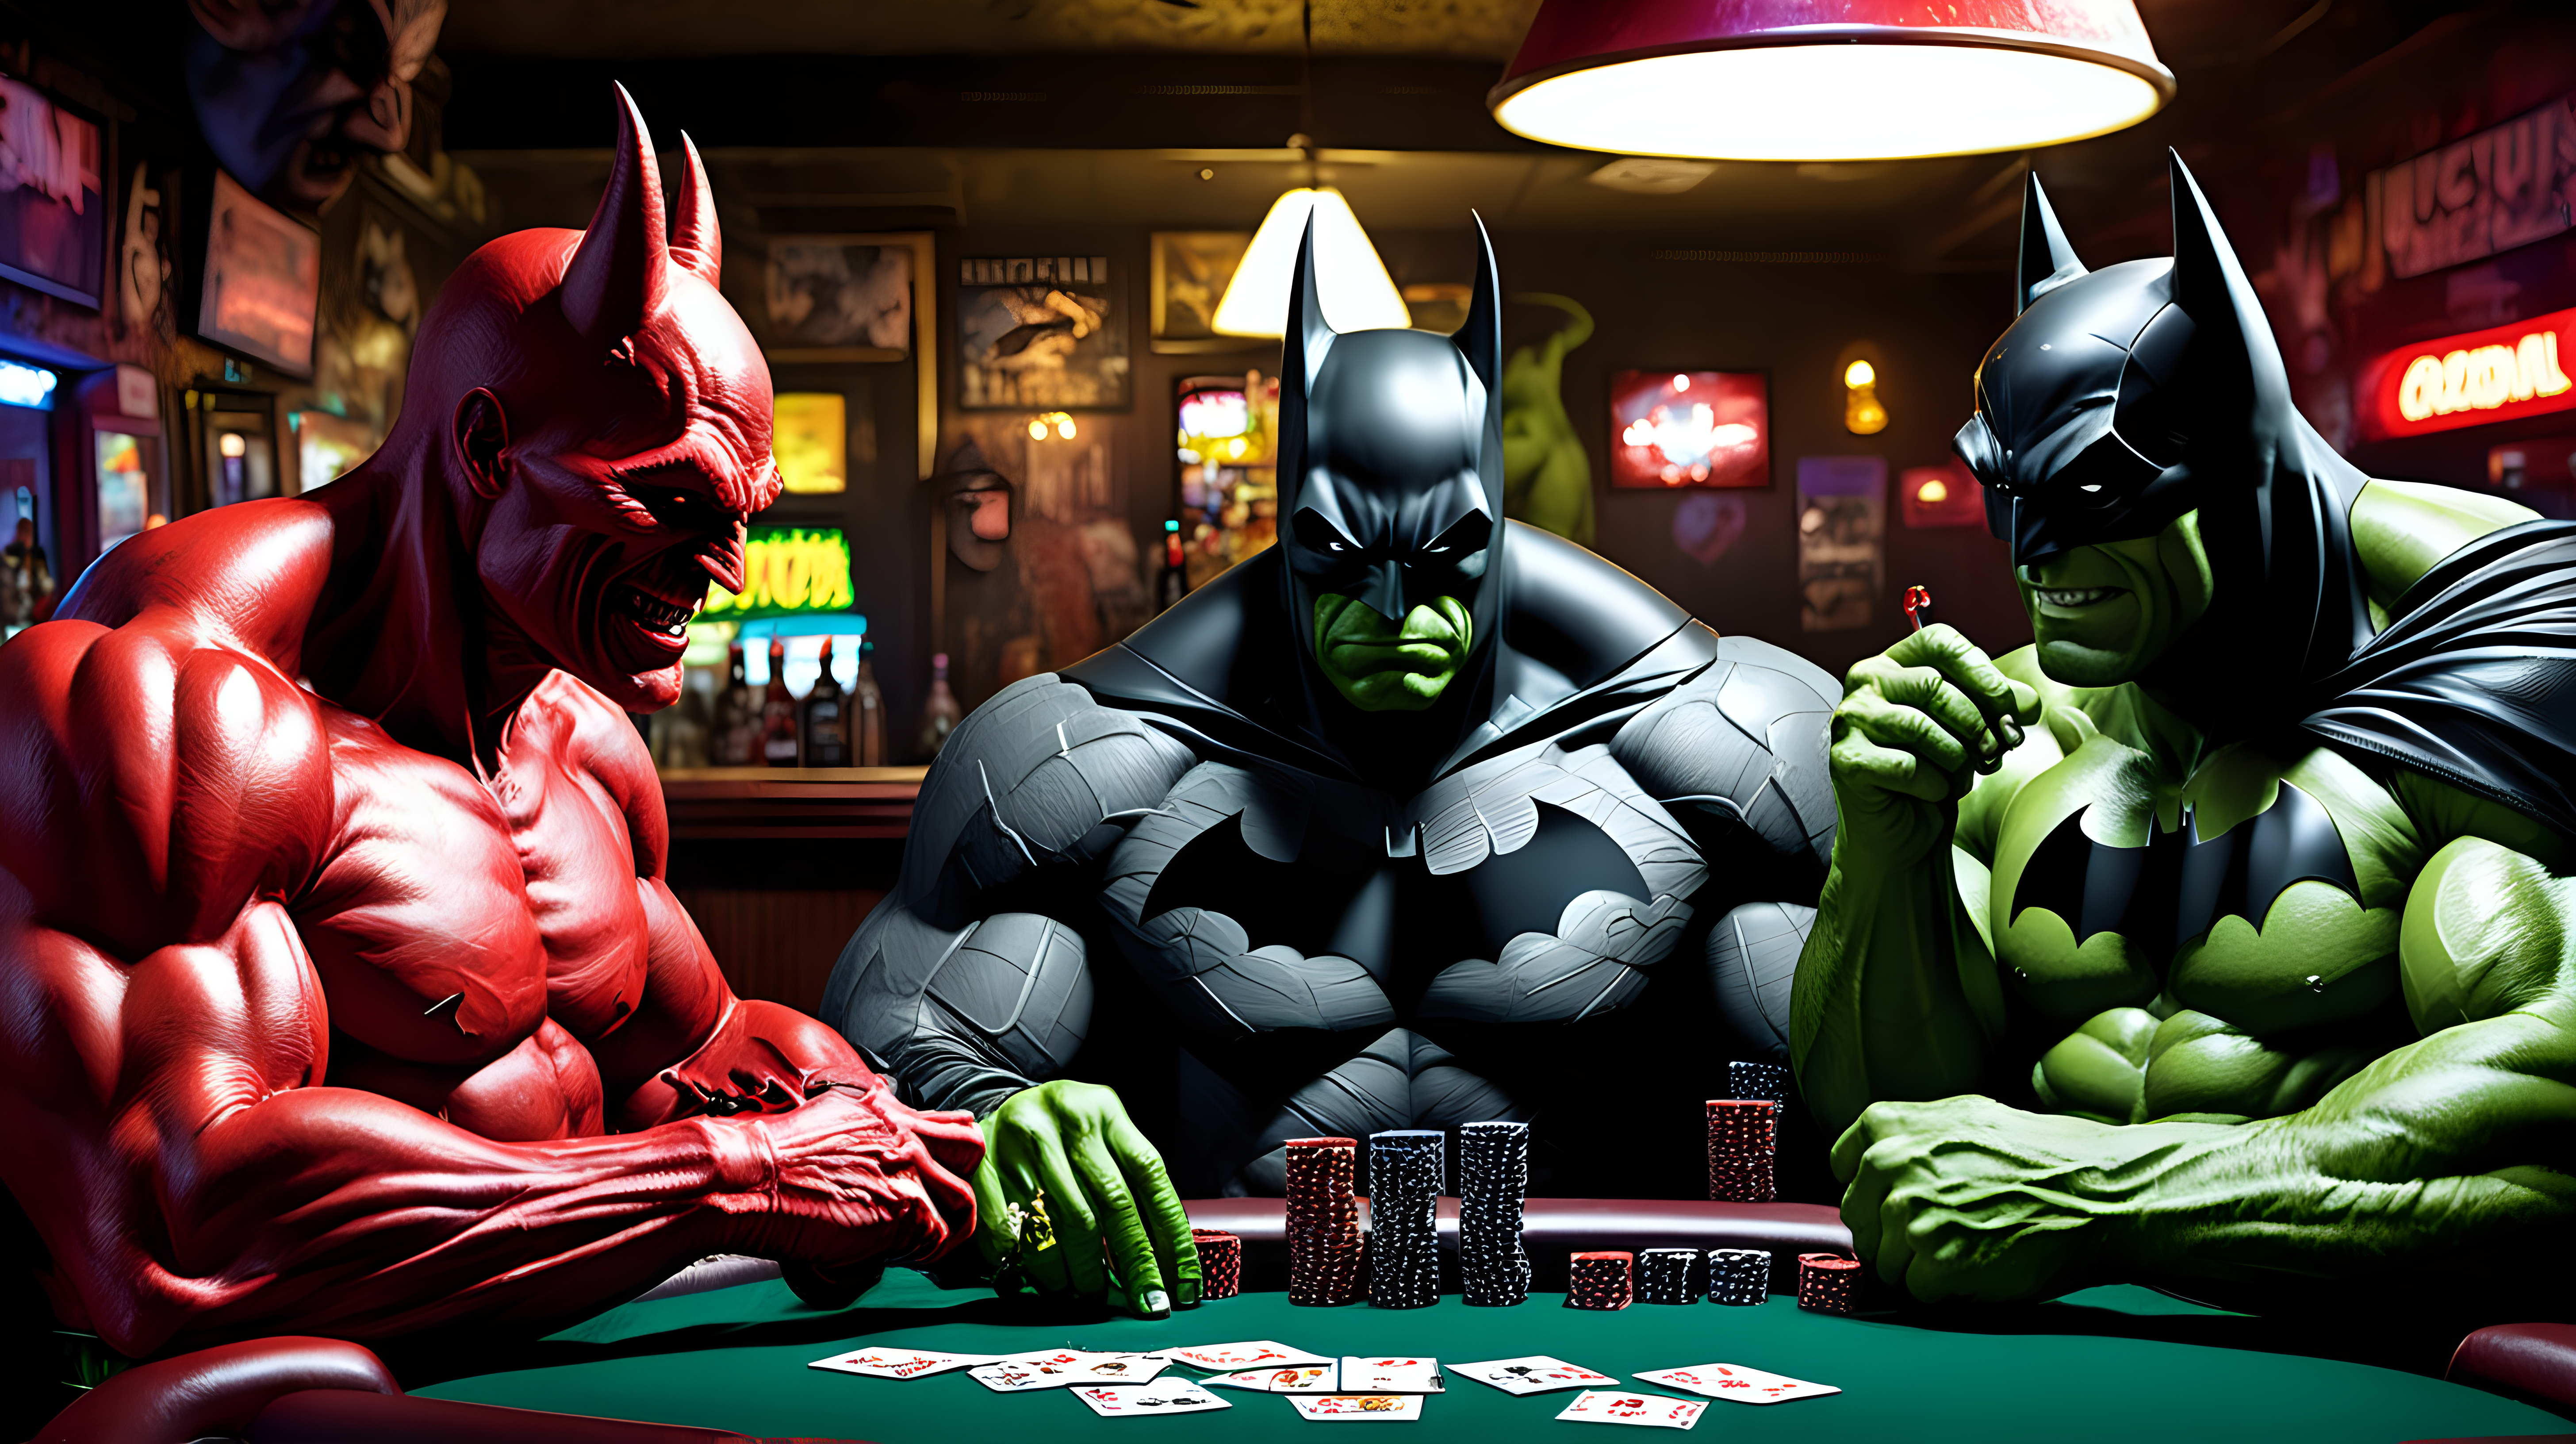 The Devil The Batman and Hulk playing poker